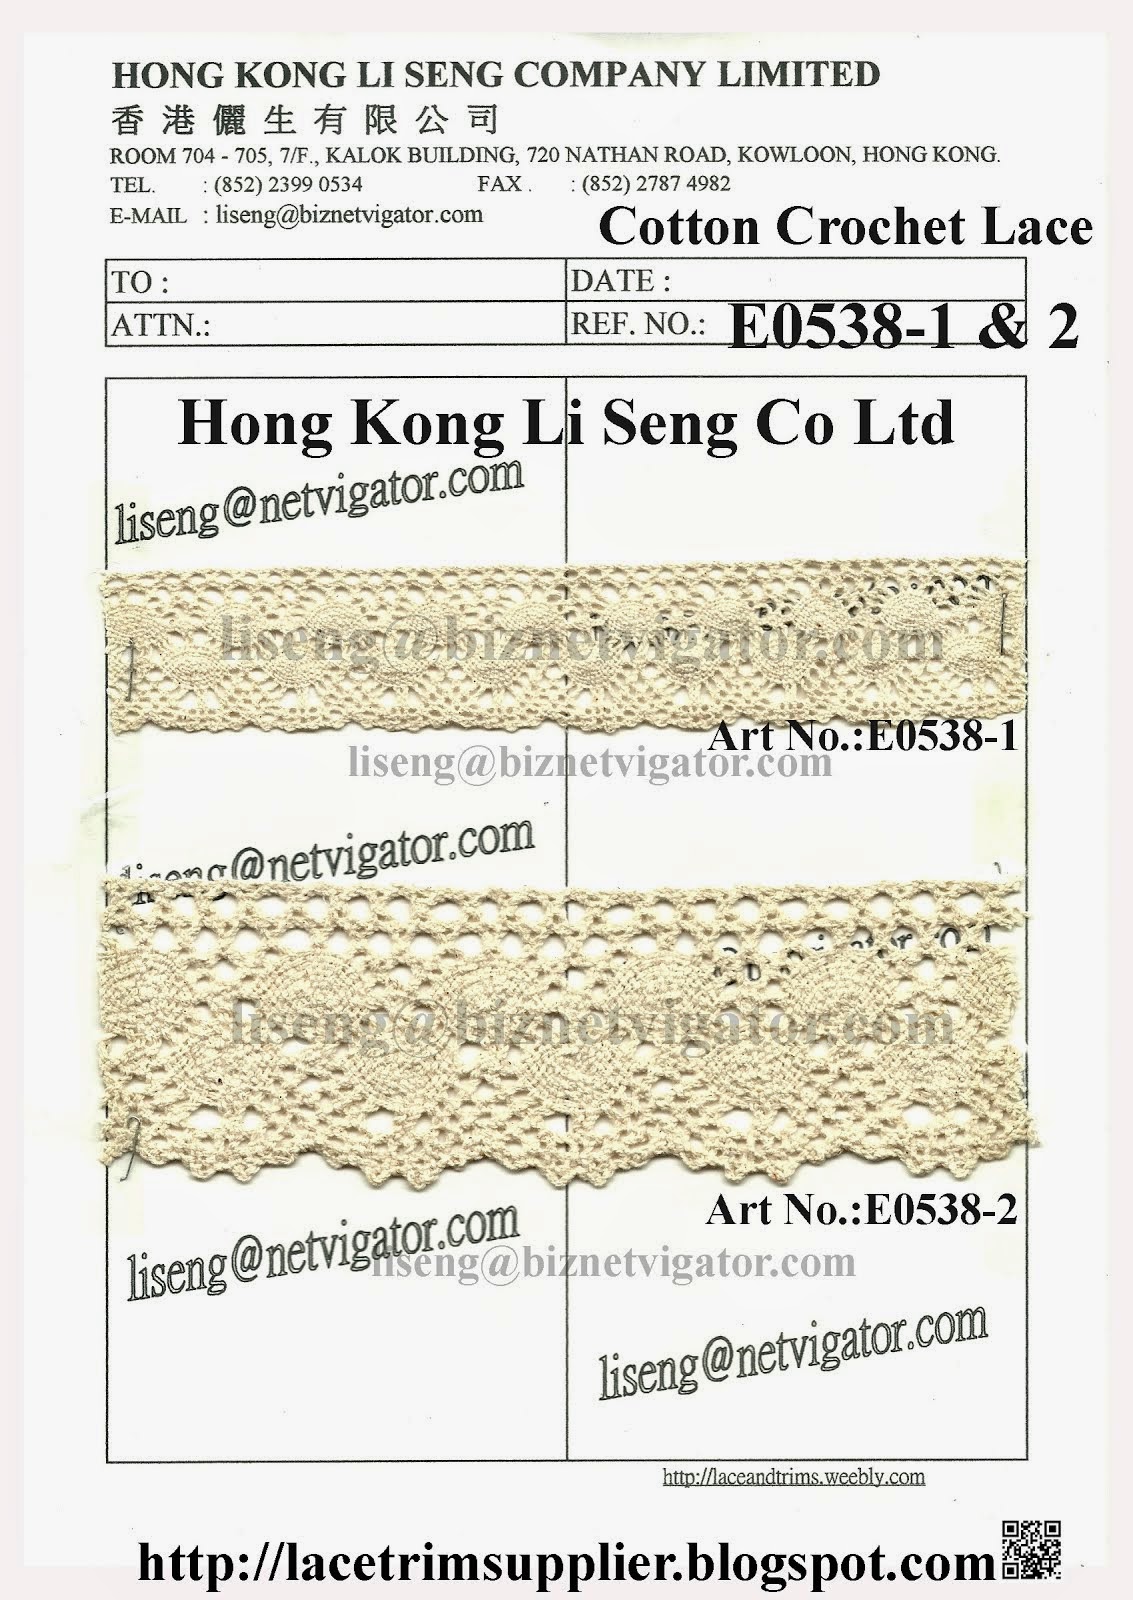 Cotton Crochet Lace Trims Factory - Hong Kong Li Seng Co Ltd